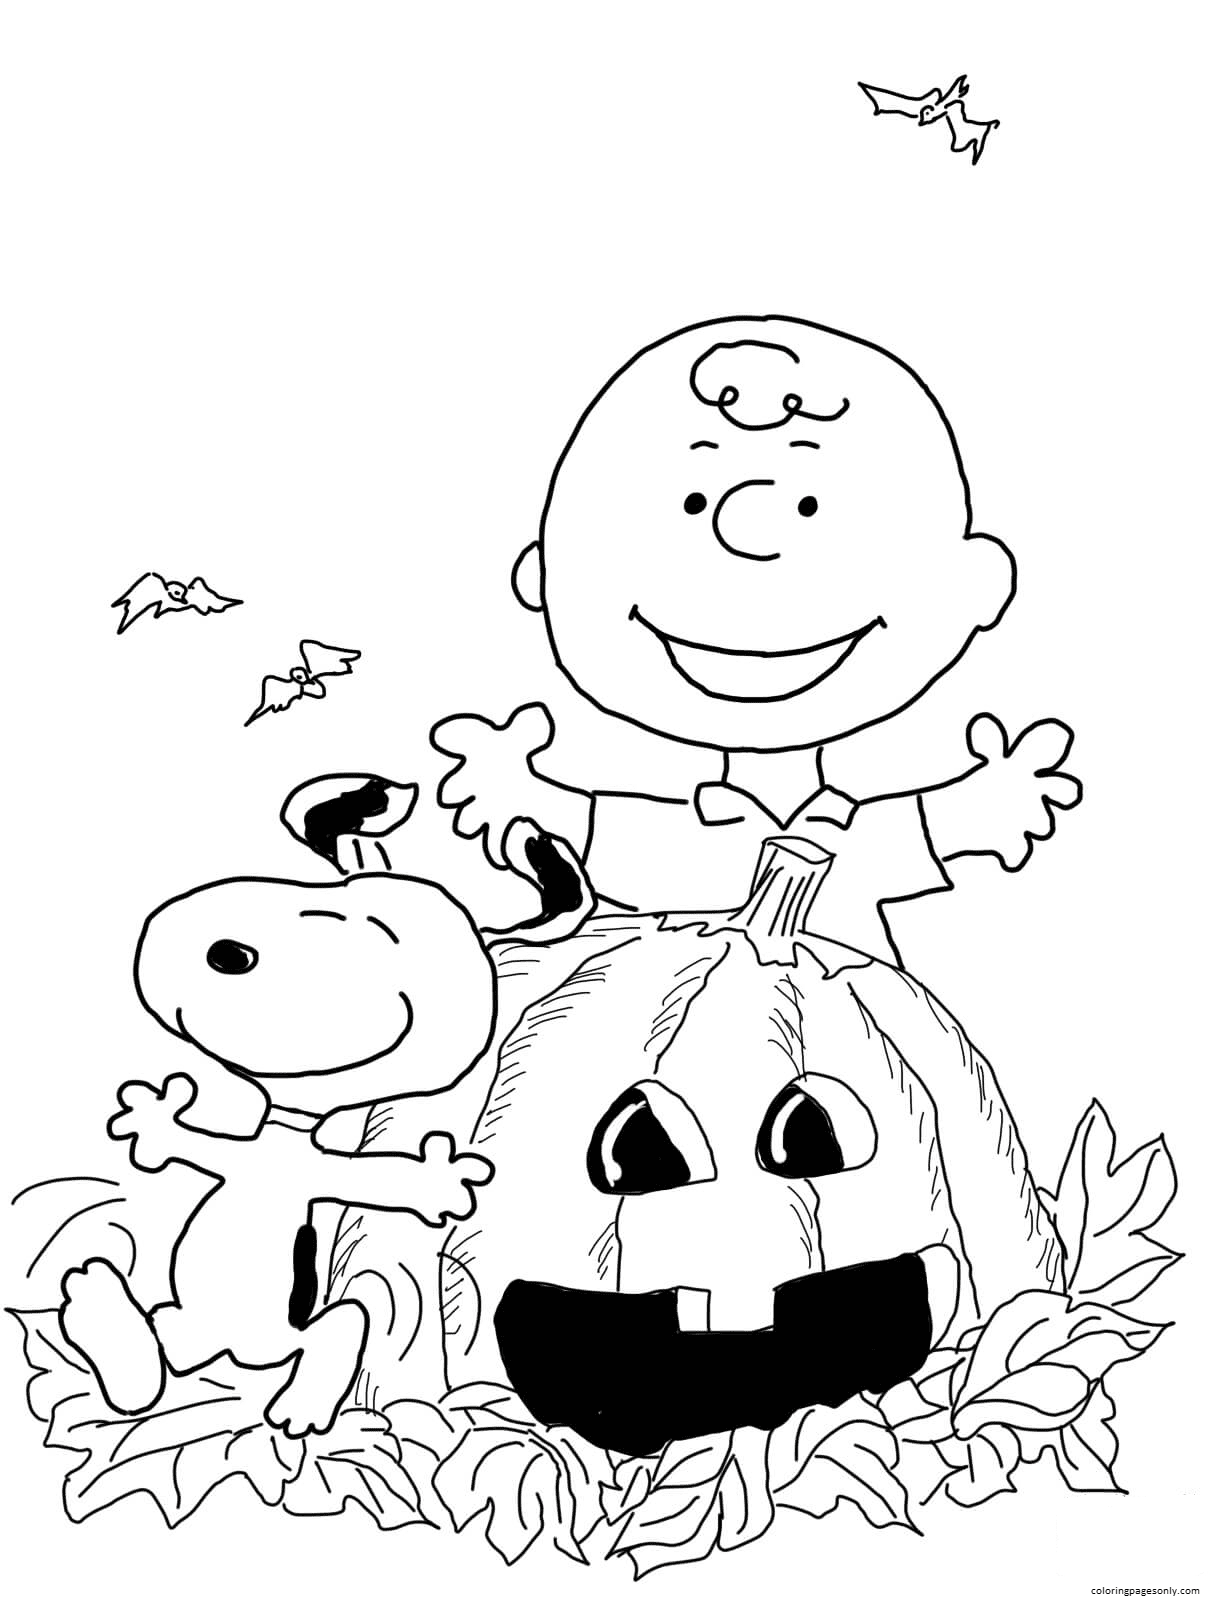 Natal de Charlie Brown do Snoopy